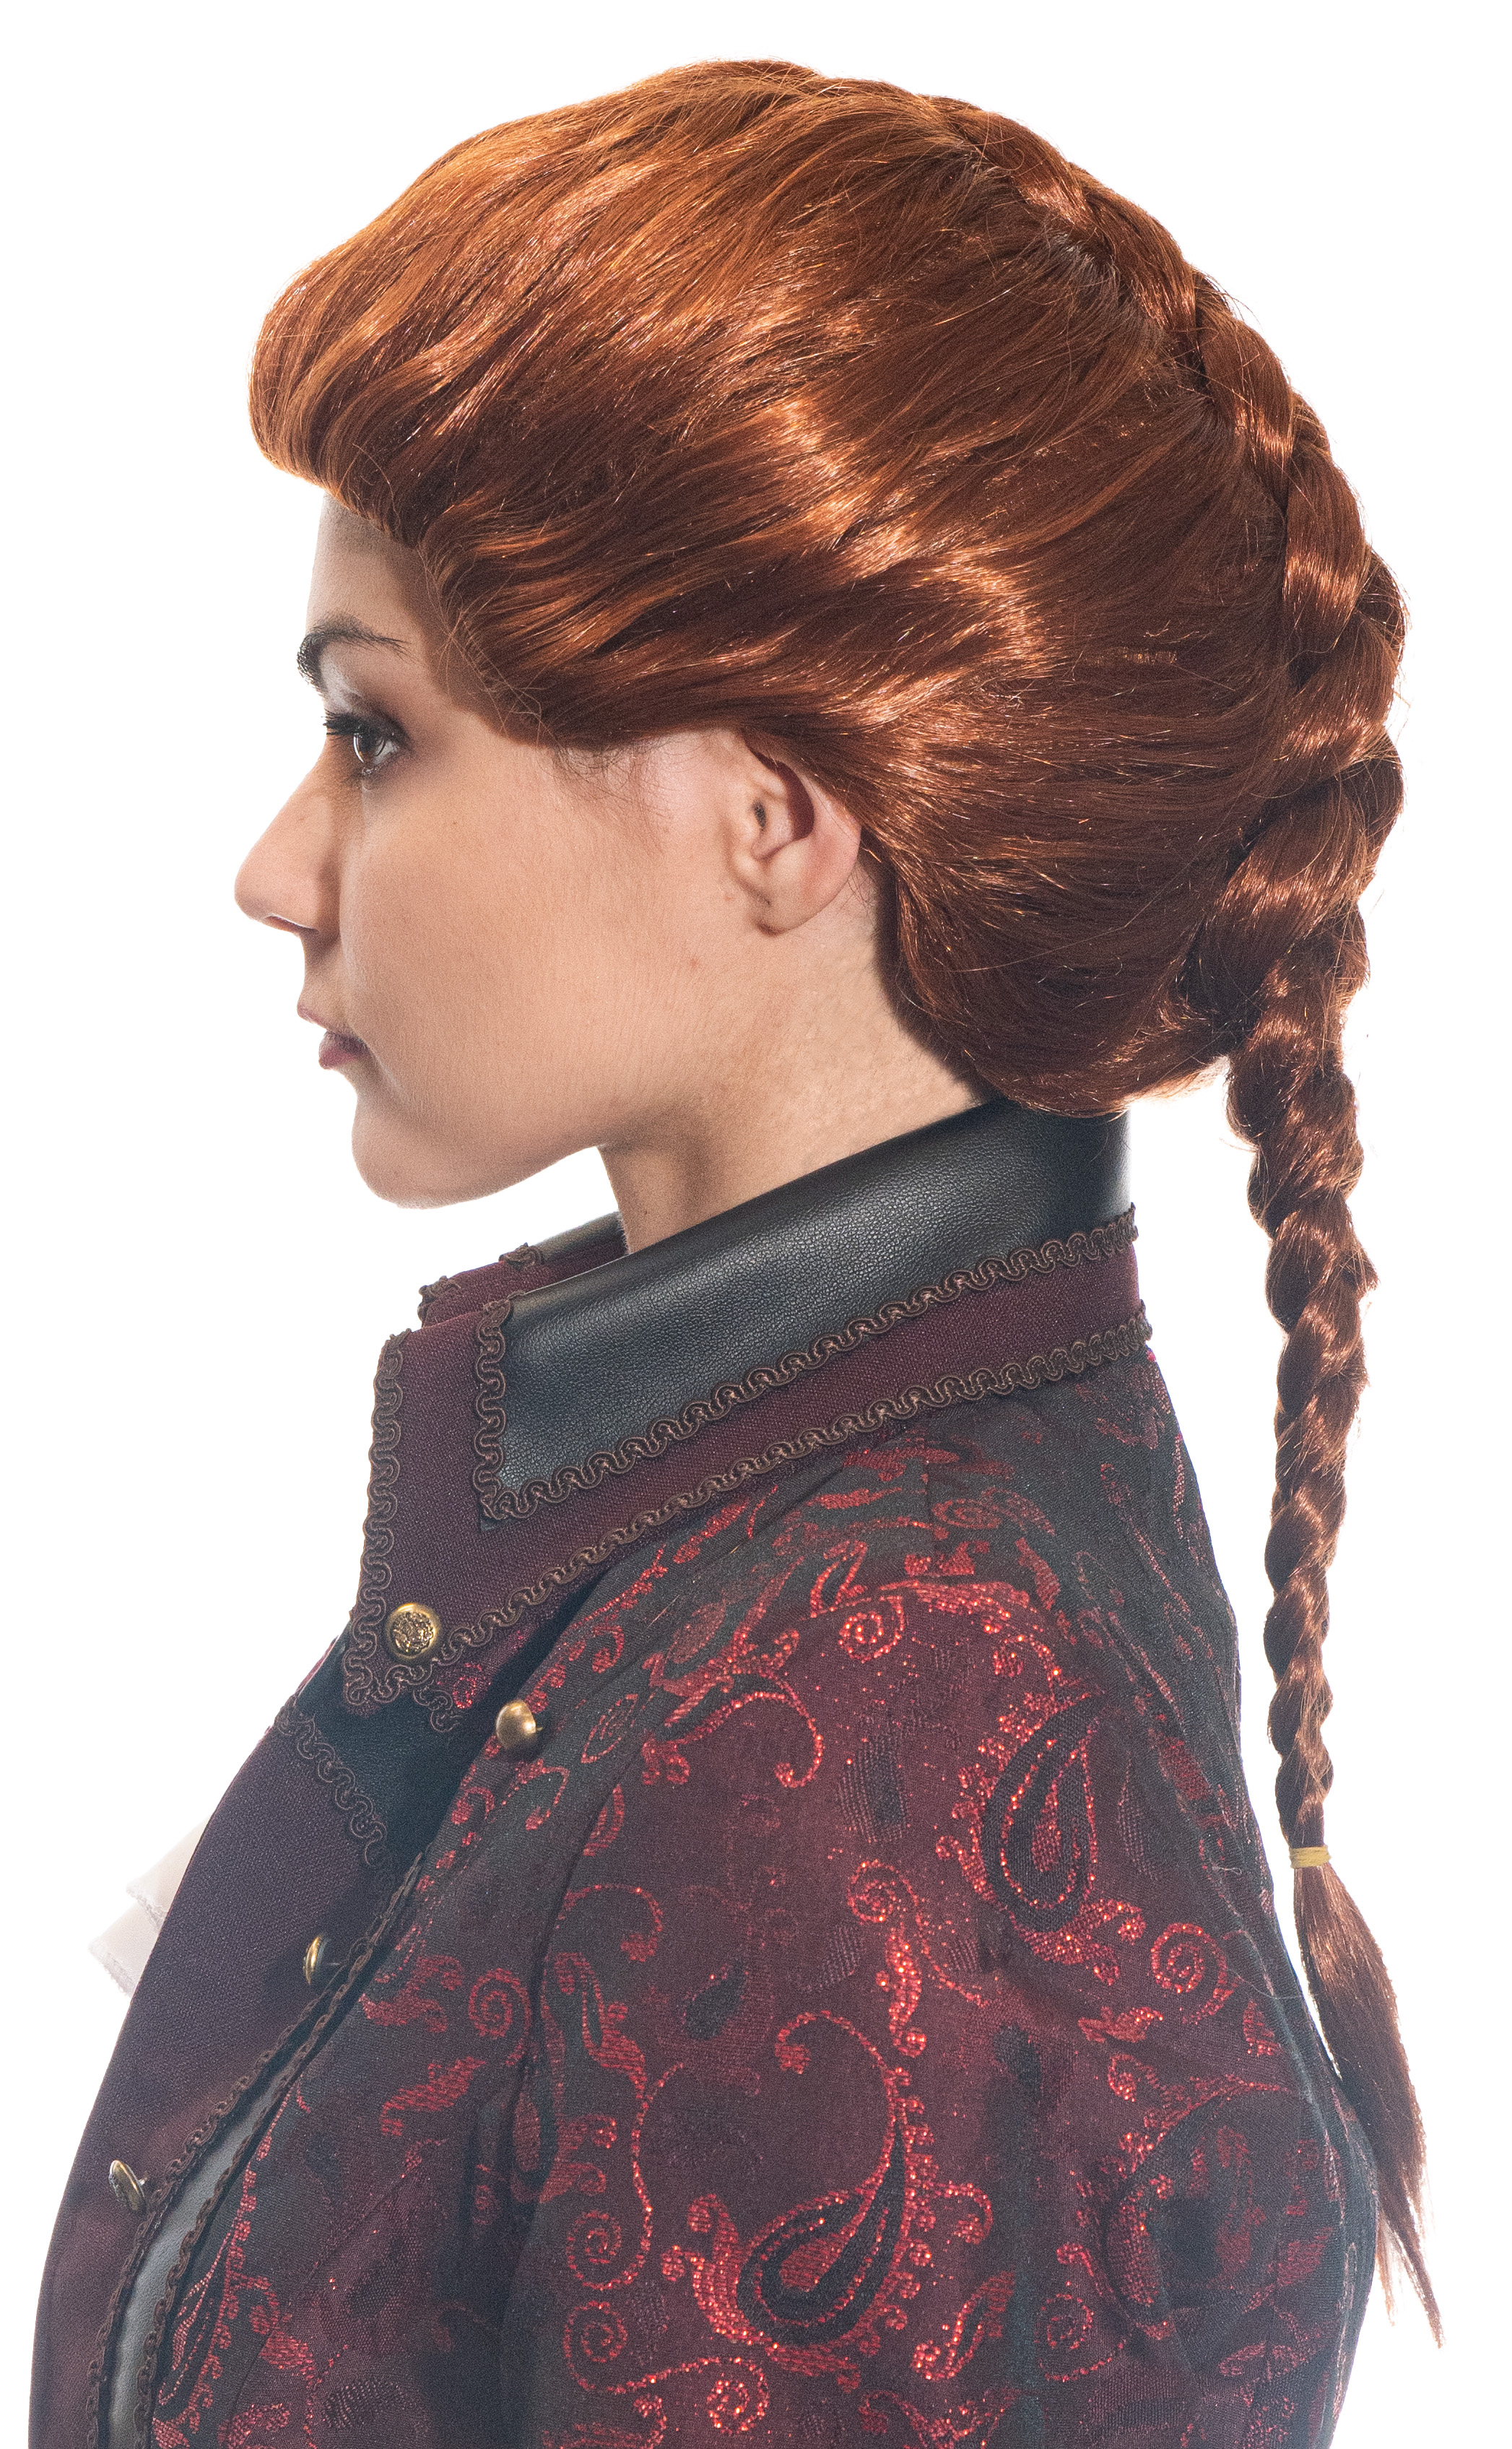 Braid hairstyle wig, women, red-brown